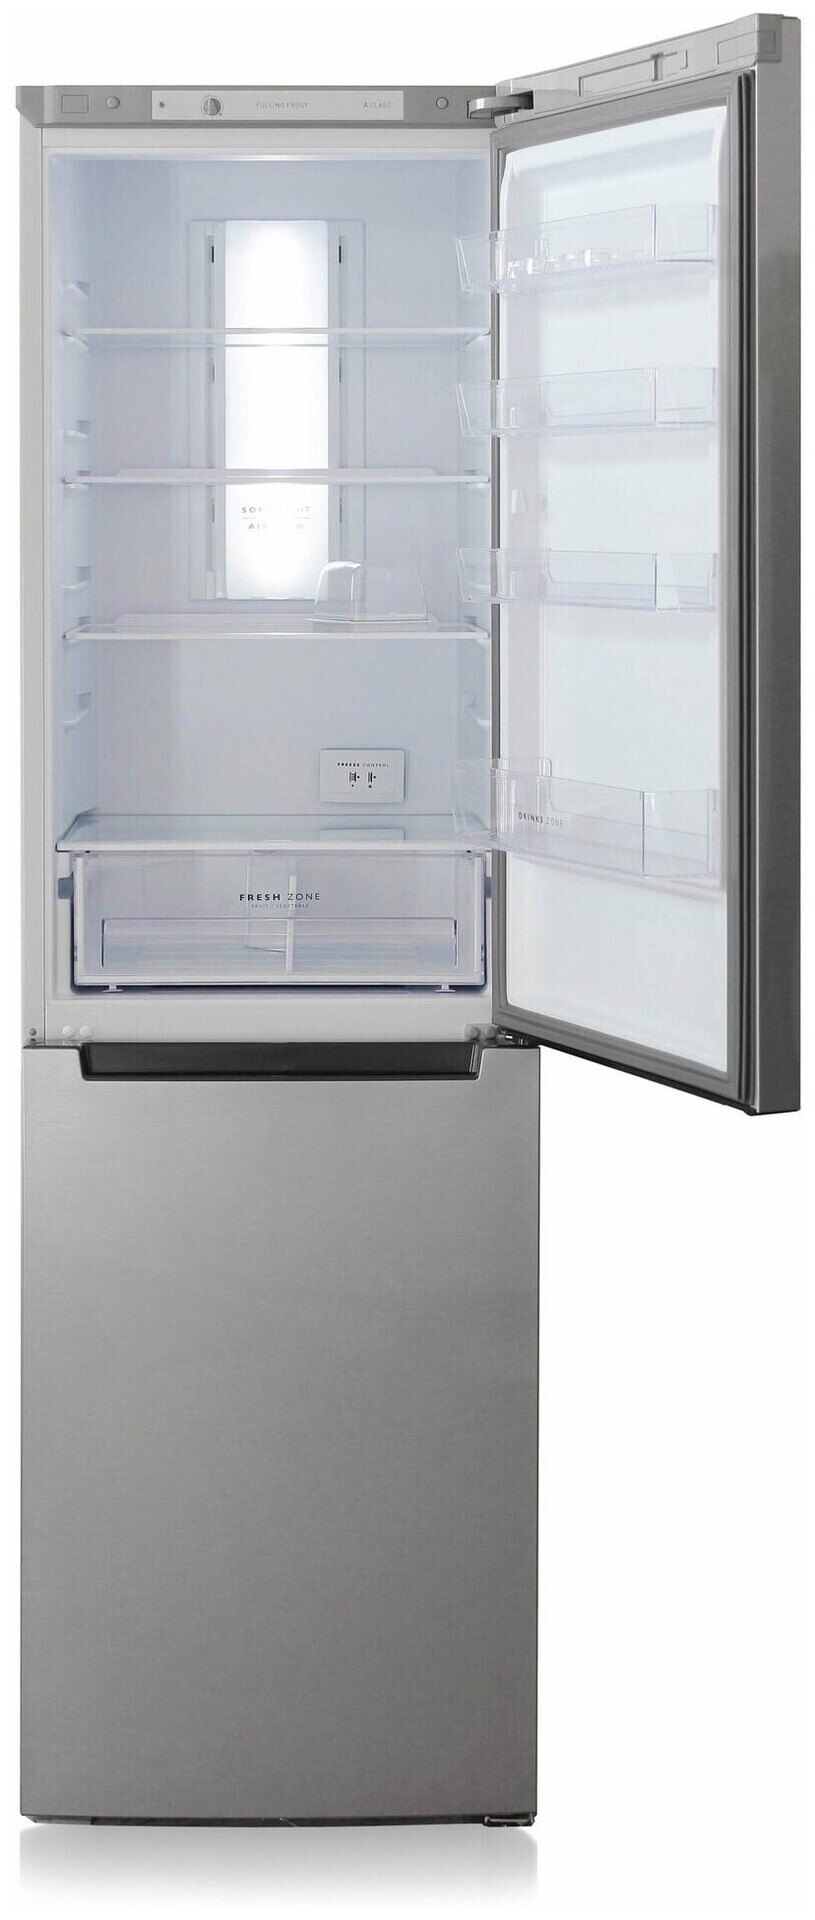 Холодильник бирюса 880nf. Бирюса c880nf. Холодильник Бирюса w880nf. Бирюса 880nf серый. Бирюса 880nf 370л.белый.